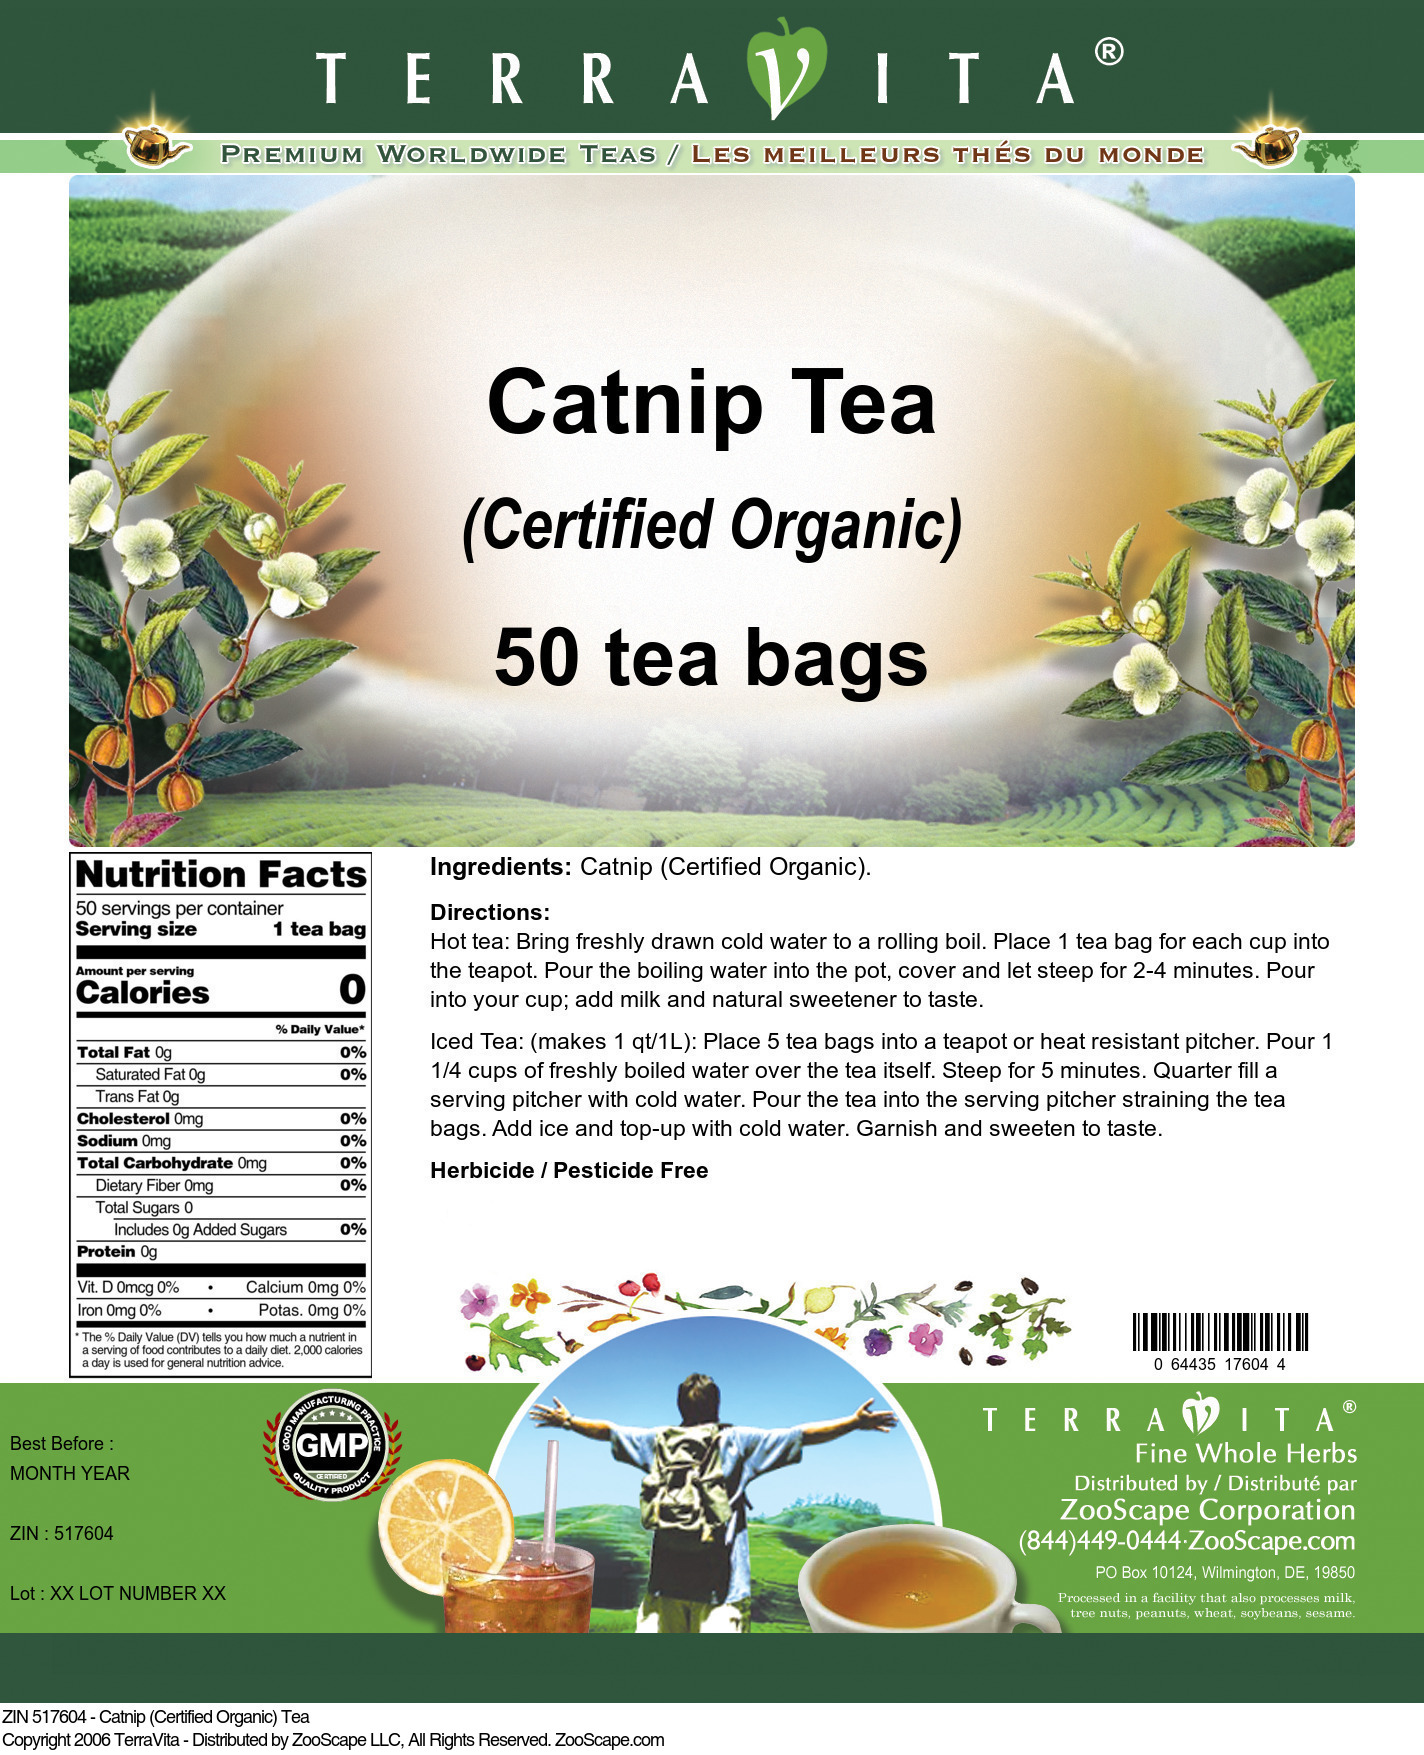 Catnip (Certified Organic) Tea - Label